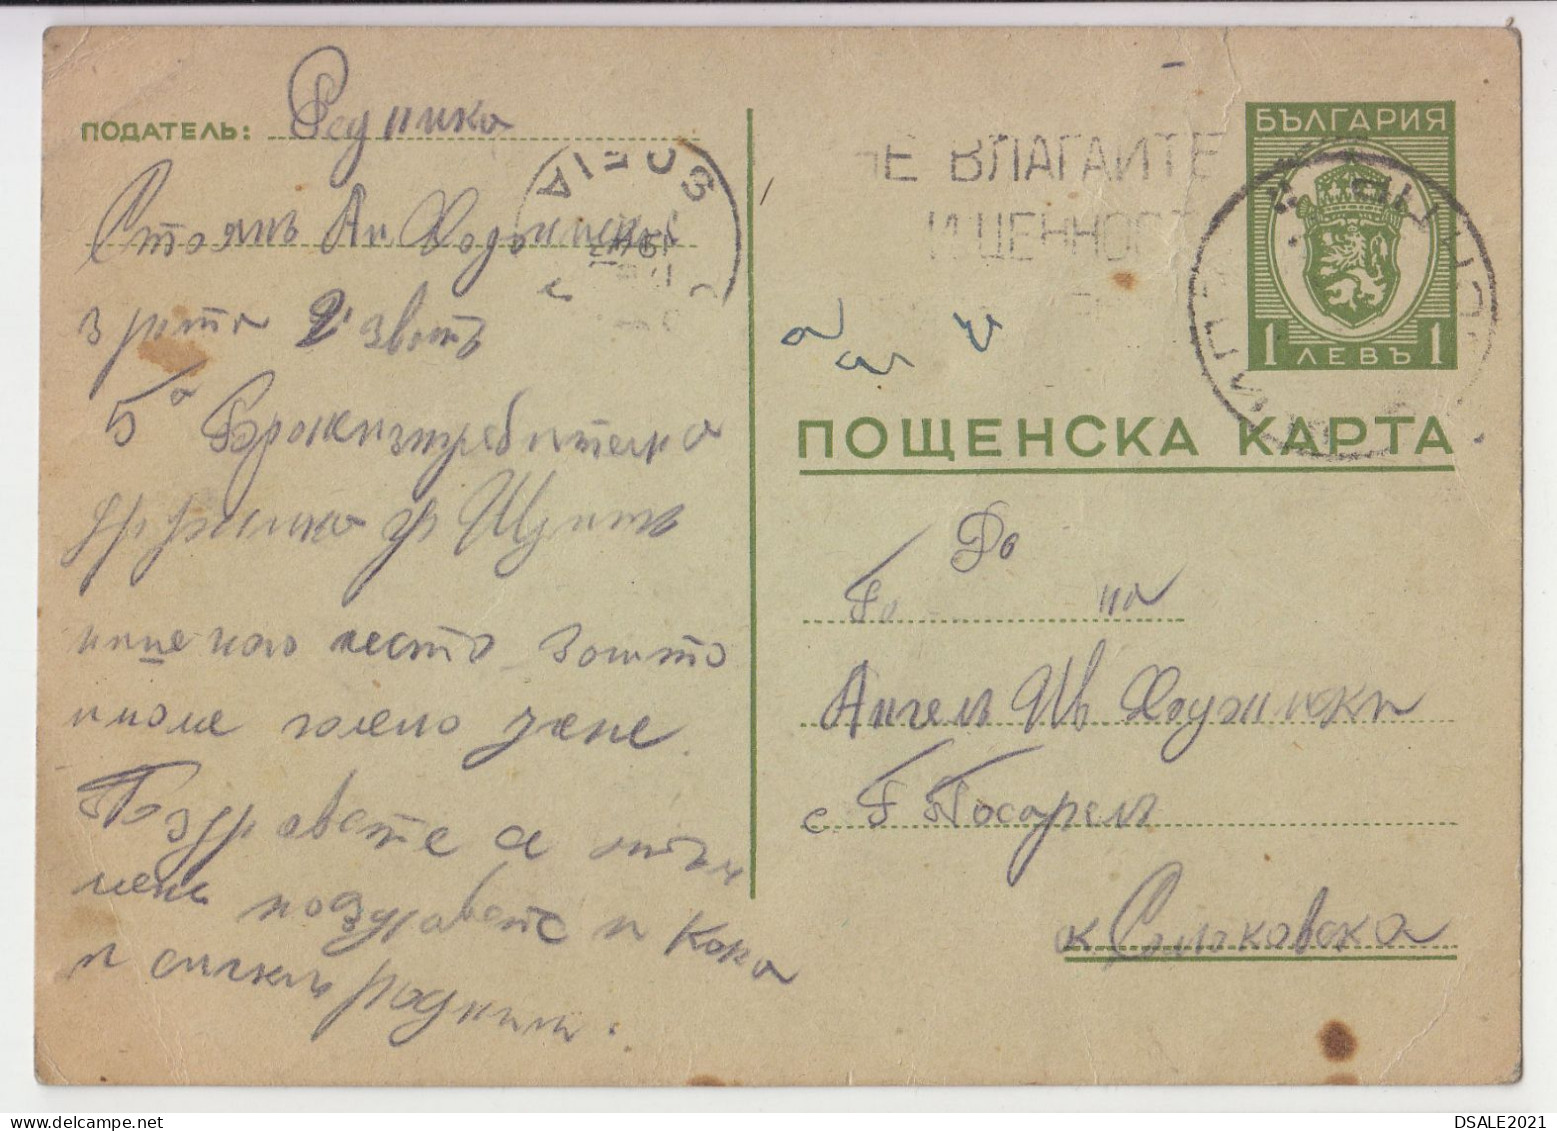 Bulgaria Bulgarien Bulgarie Ww2-1943 Bulgarian Postal Office SHTIP-Macedonia Sent To Sofia Stationery Card, Entier /4756 - Guerra